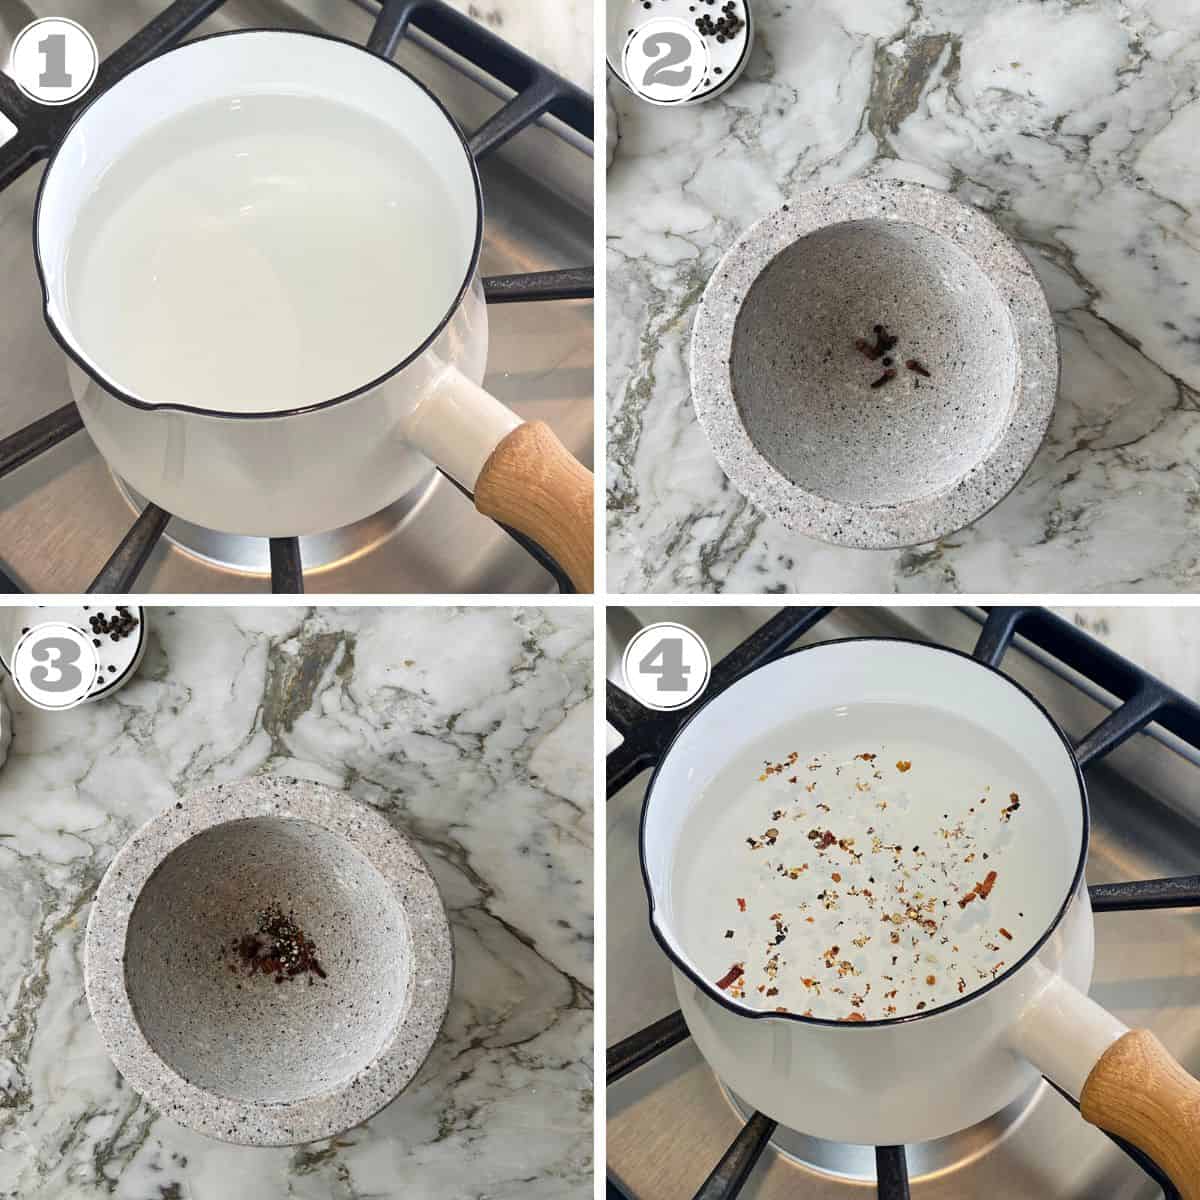 photos one through four showing how to make kadha herbal tea 